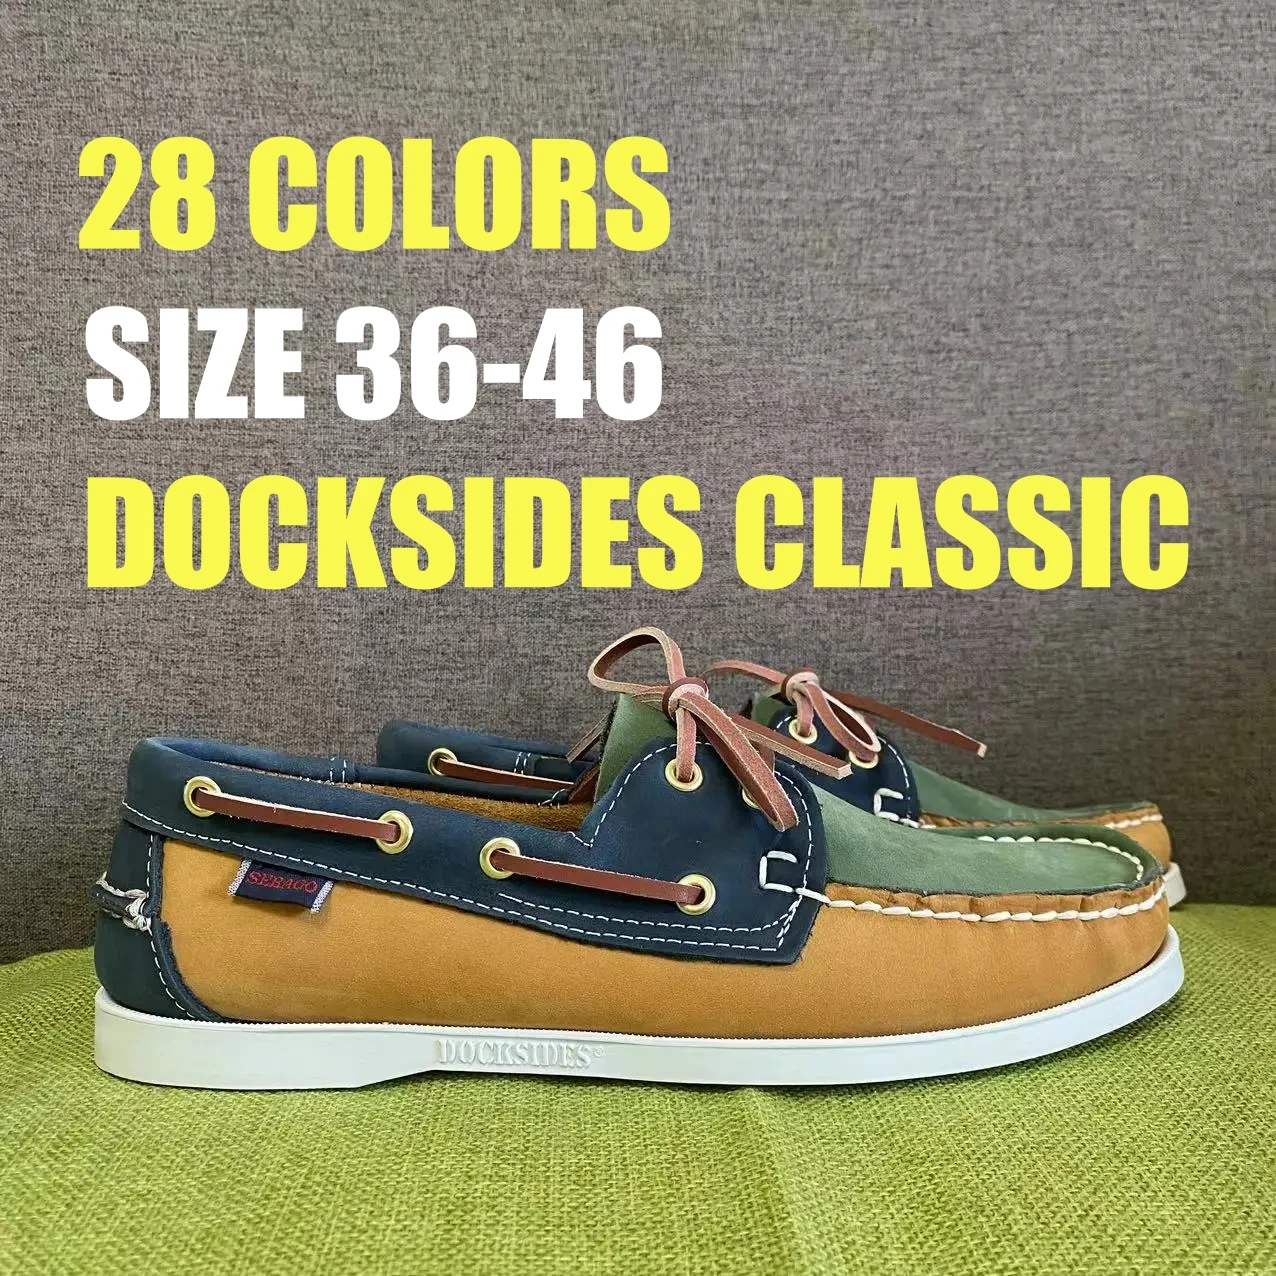 

Men Suede Leather Homme Authentic Sebago Docksides Shoes - Premium Leather Moc Toe Lace Up Boat Shoes 135A